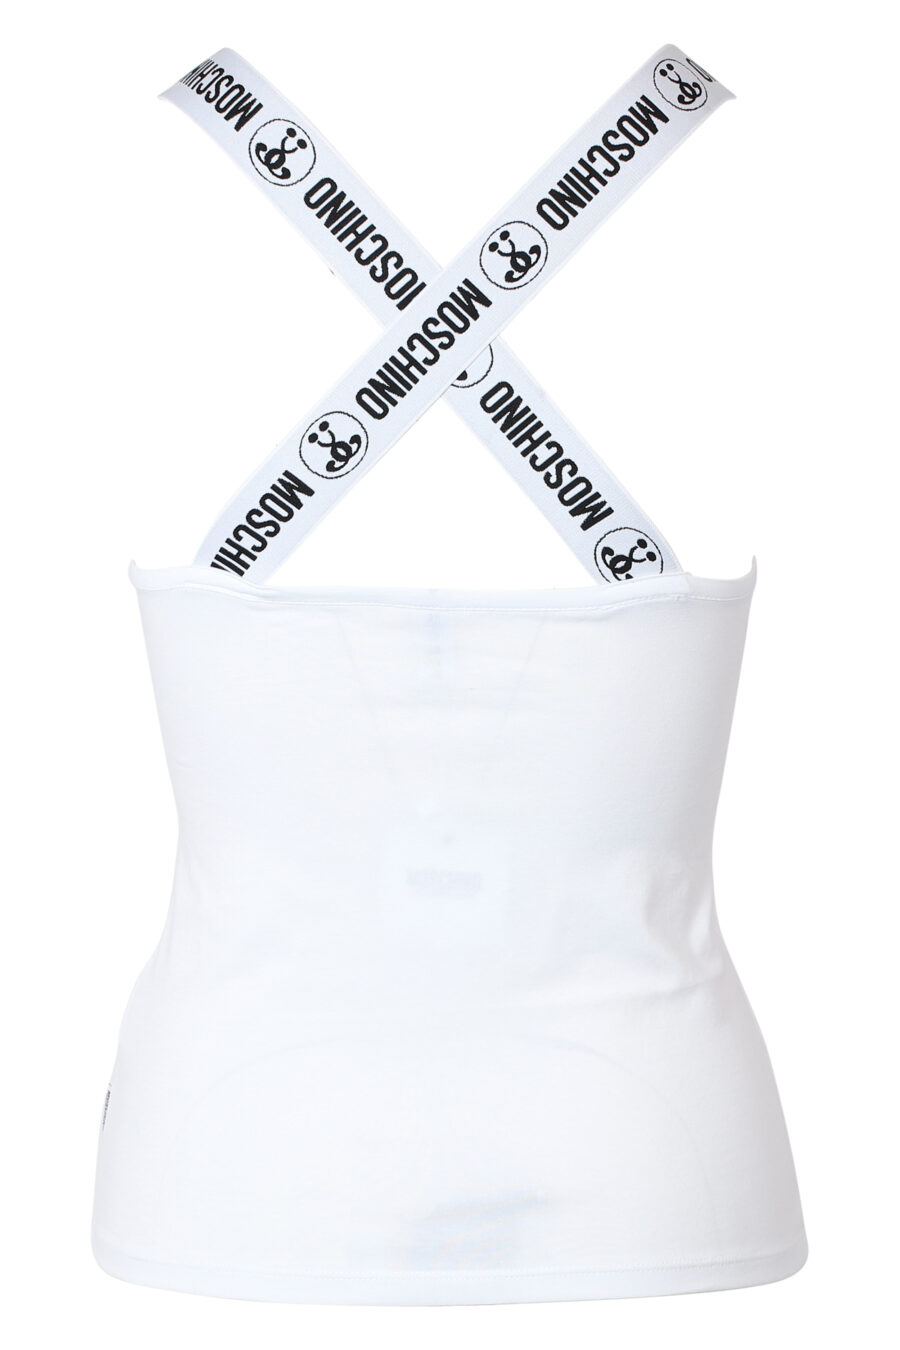 Camiseta sin mangas blanca con logo en tirantes - IMG 9843